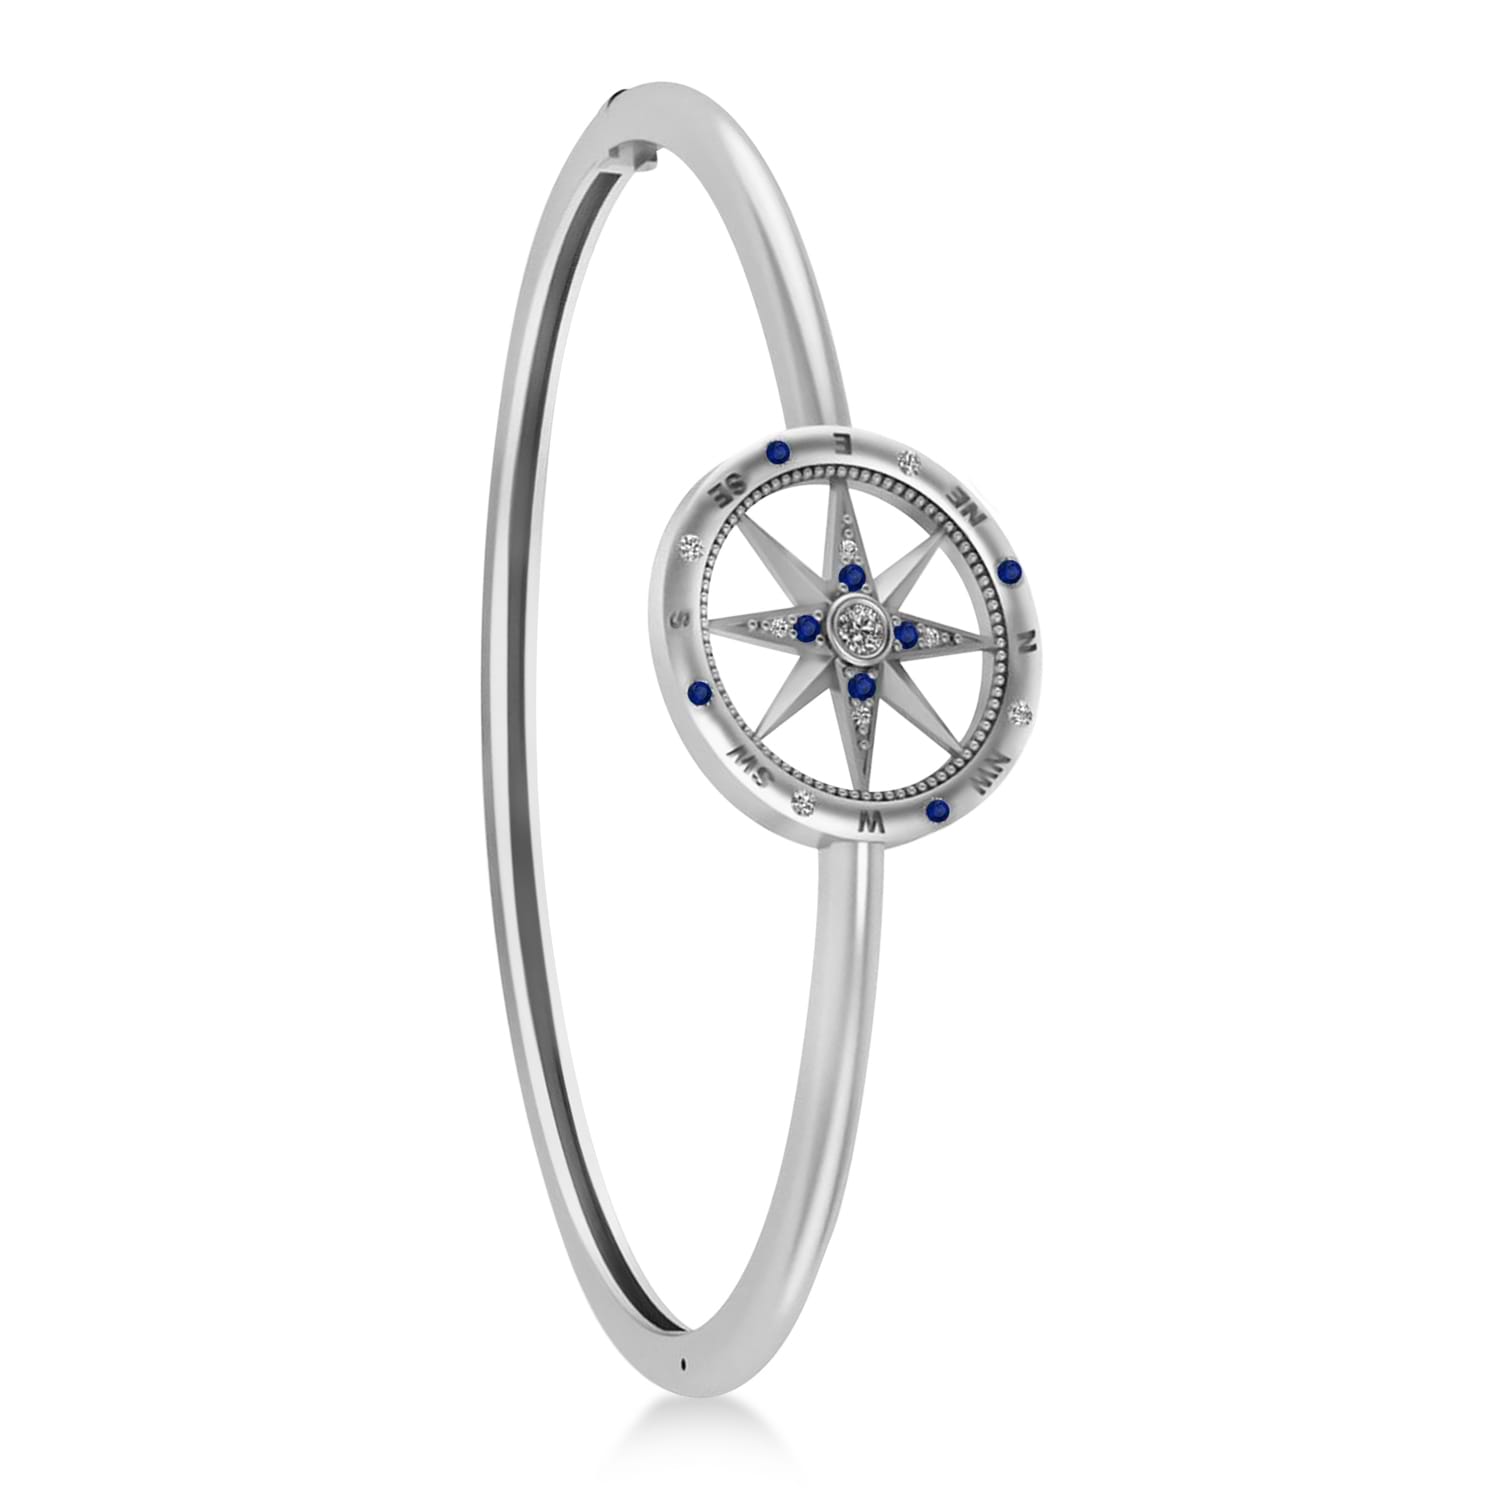 Blue Sapphire & Diamond Compass Bangle Bracelet 14k White Gold (0.19ct)